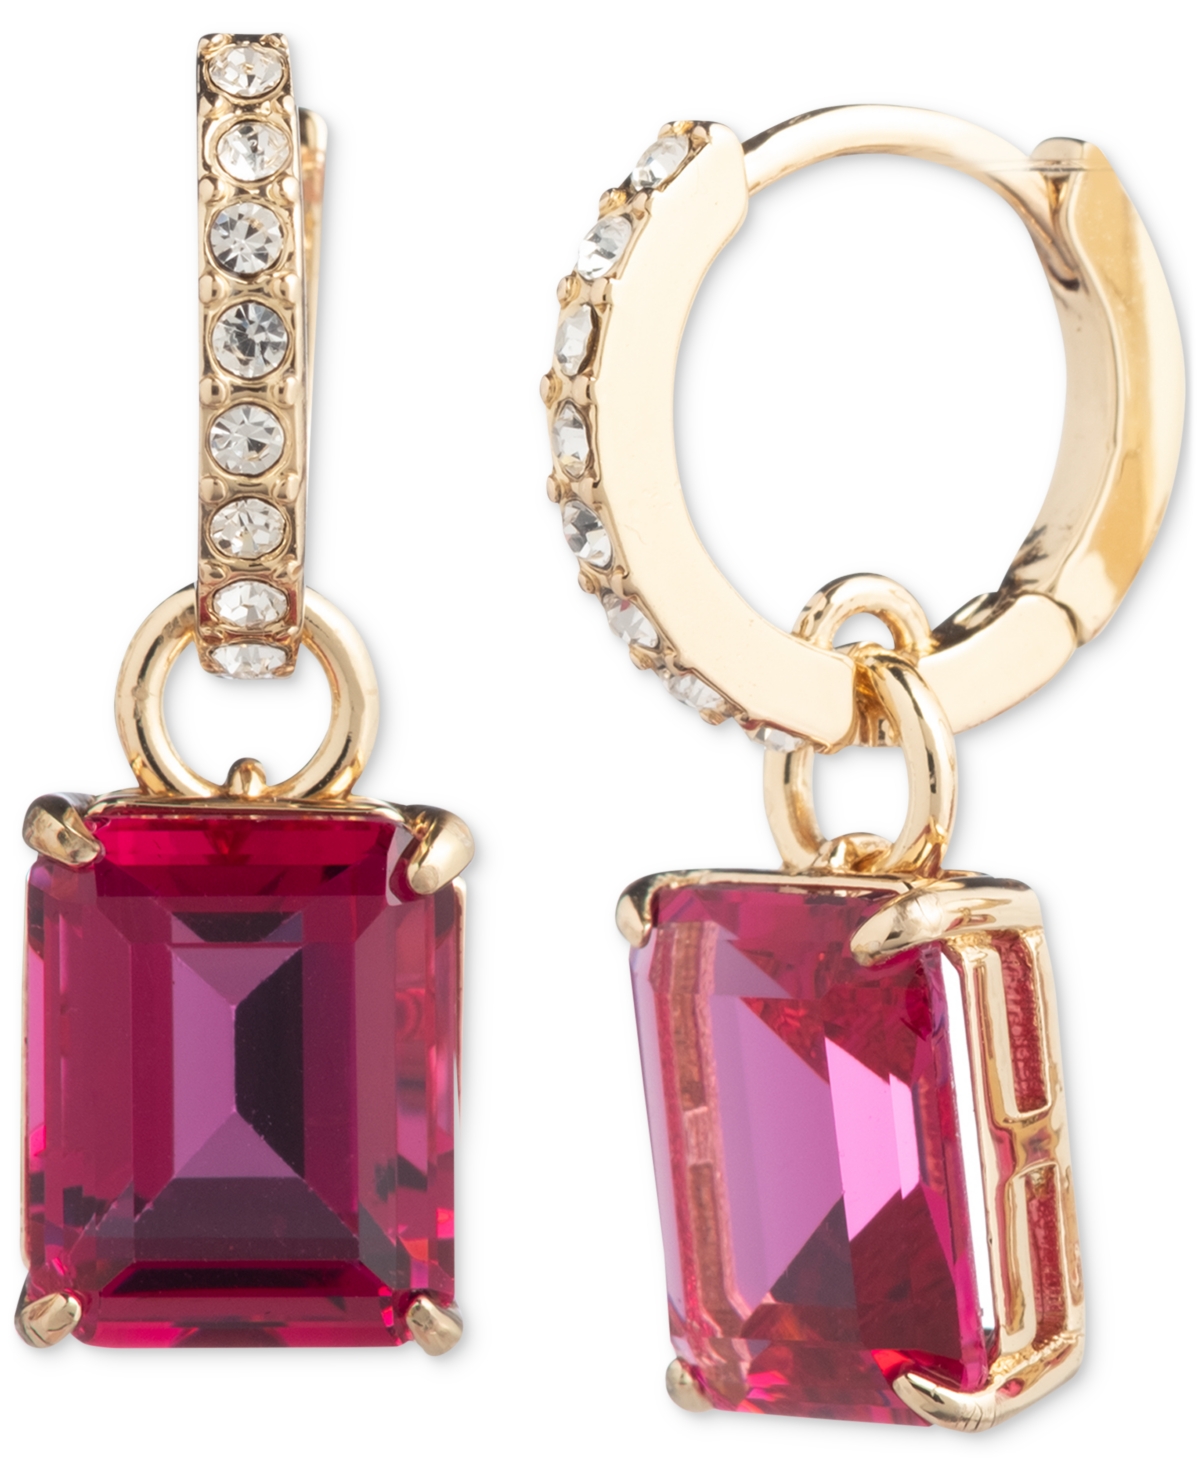 Gold-Tone Color Stone Charm Pave Huggie Hoop Earrings - Pink